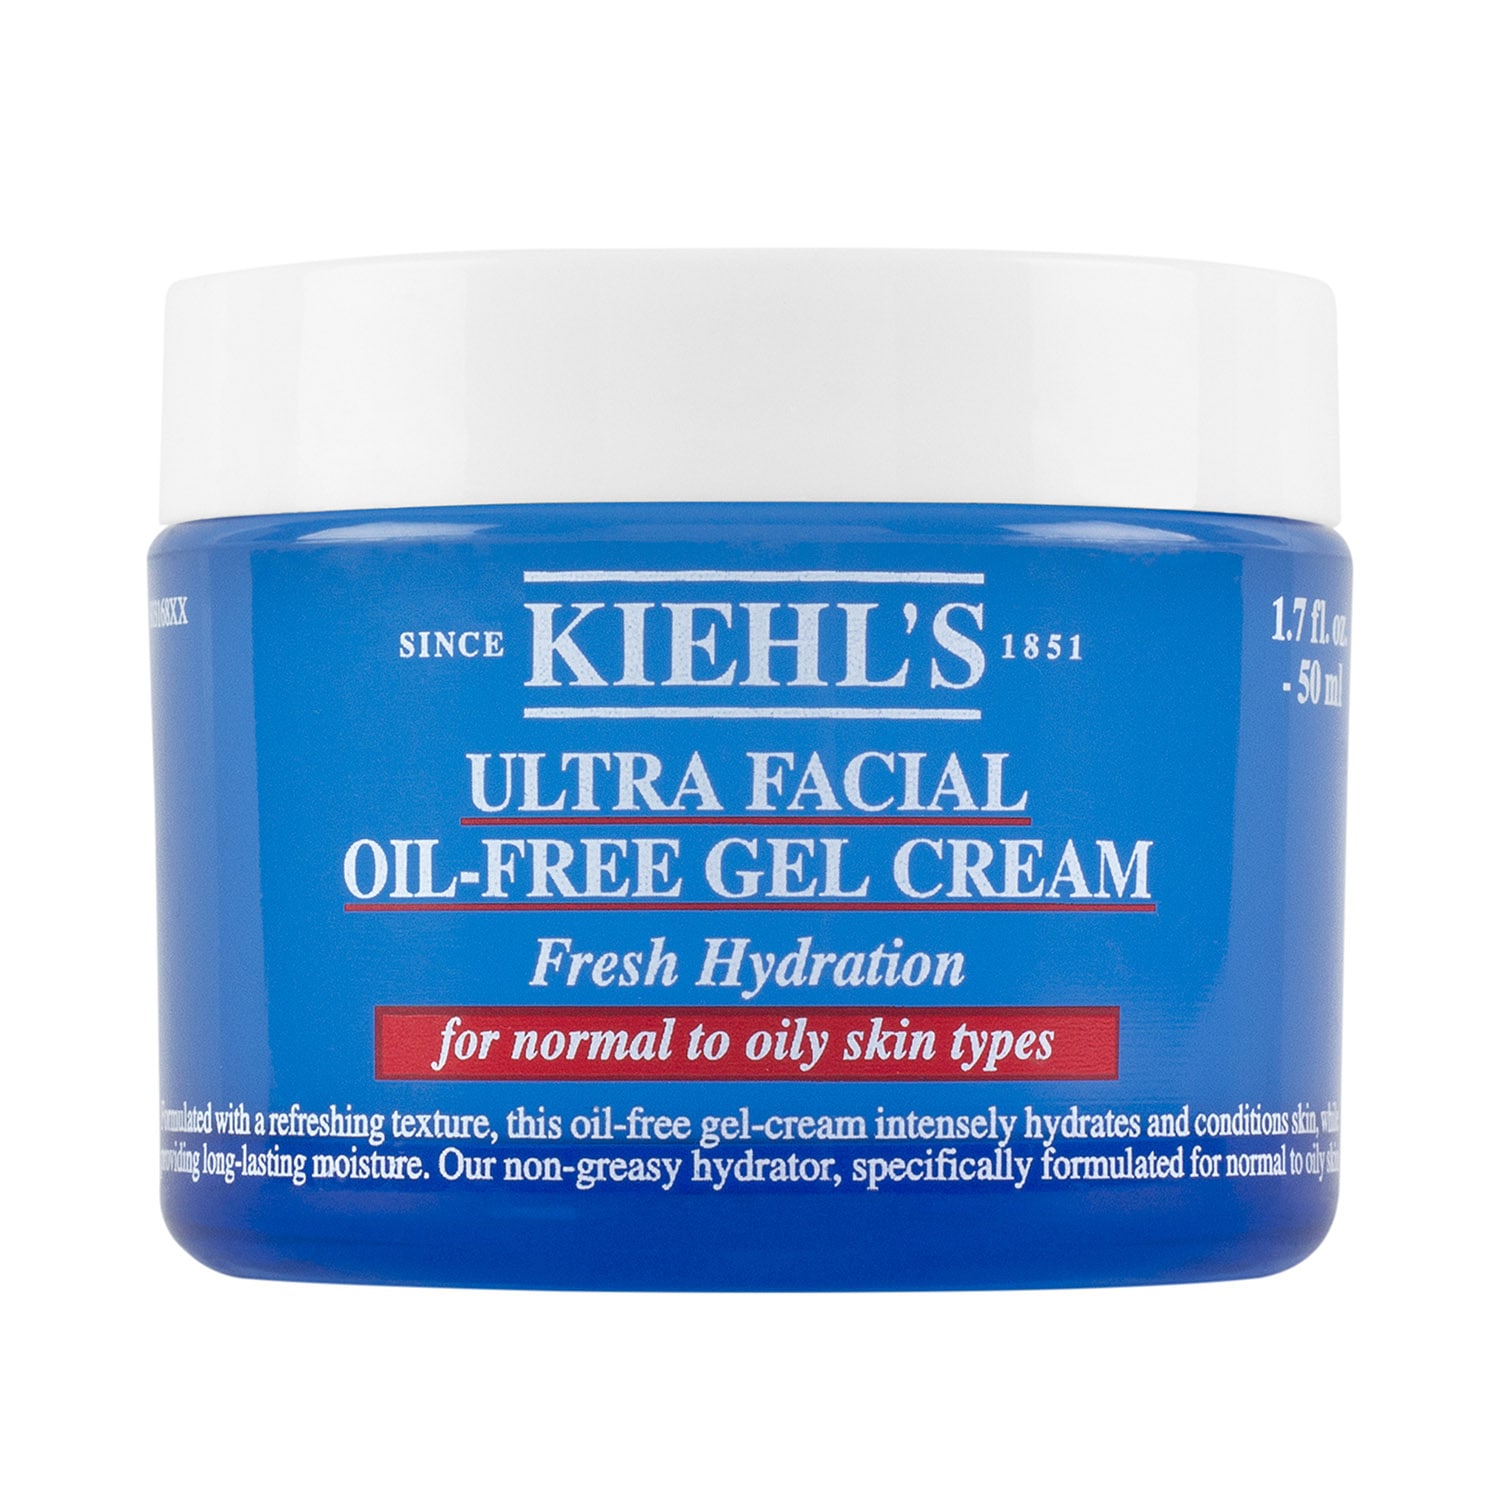 Ultra facial oil free gel cream 3605975080896 17floz